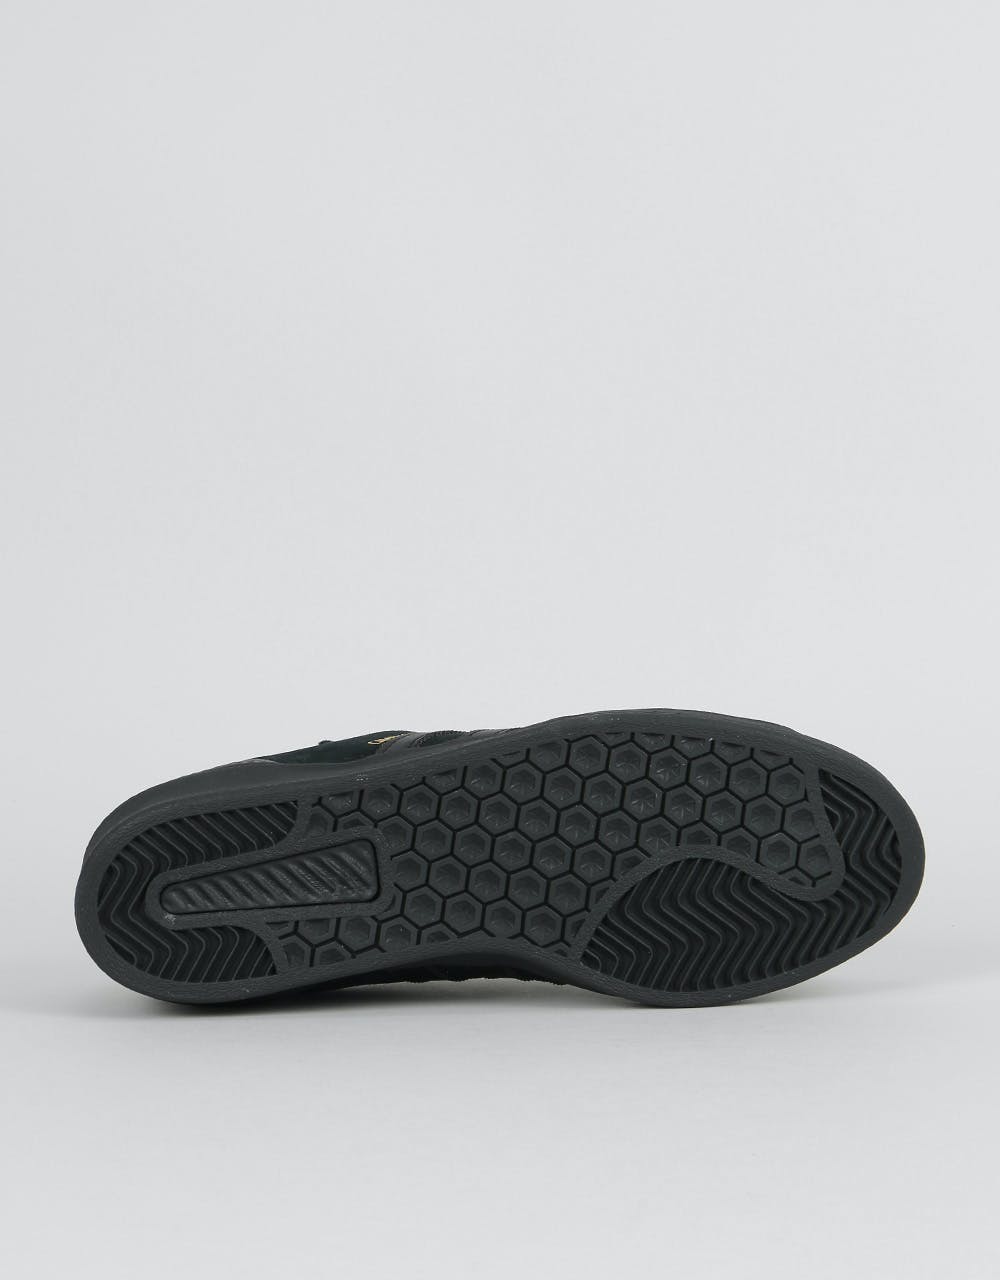 Adidas Campus ADV Skate Shoes - Core Black/Core Black/Gold Metallic